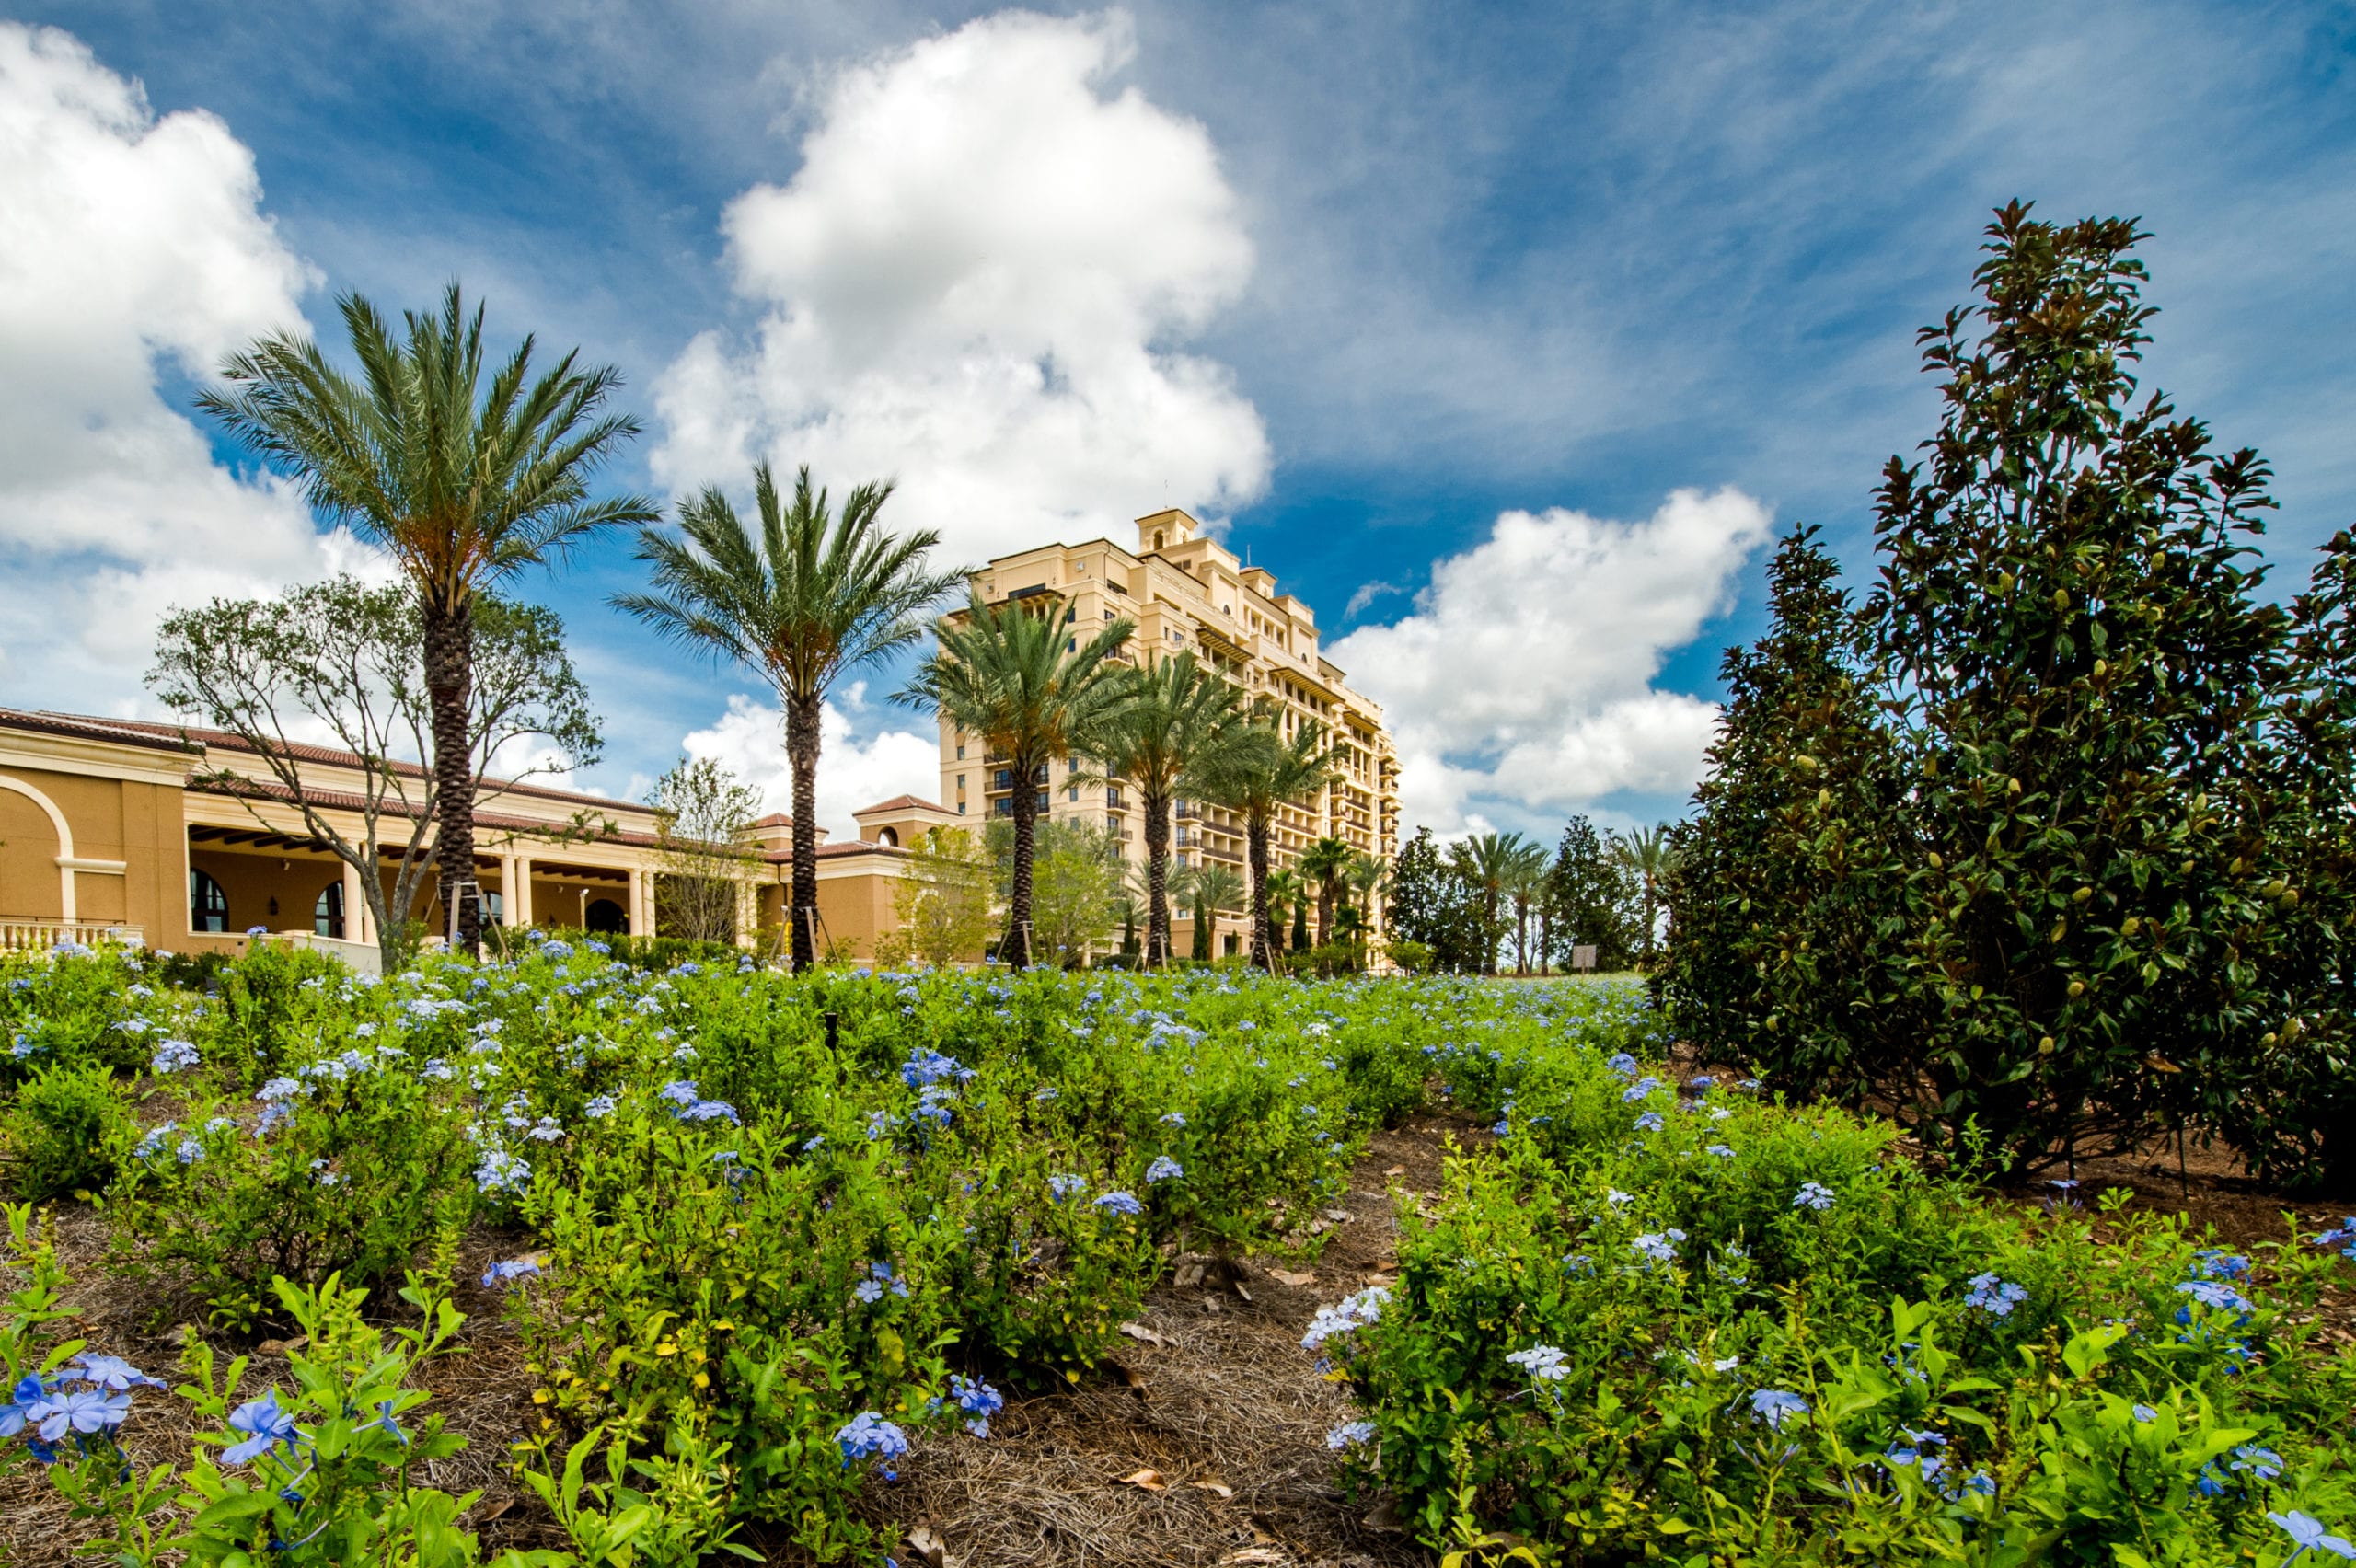 IU C&I Studios Portfolio Four Seasons Building by flowers under blue cloudy skies with palm trees